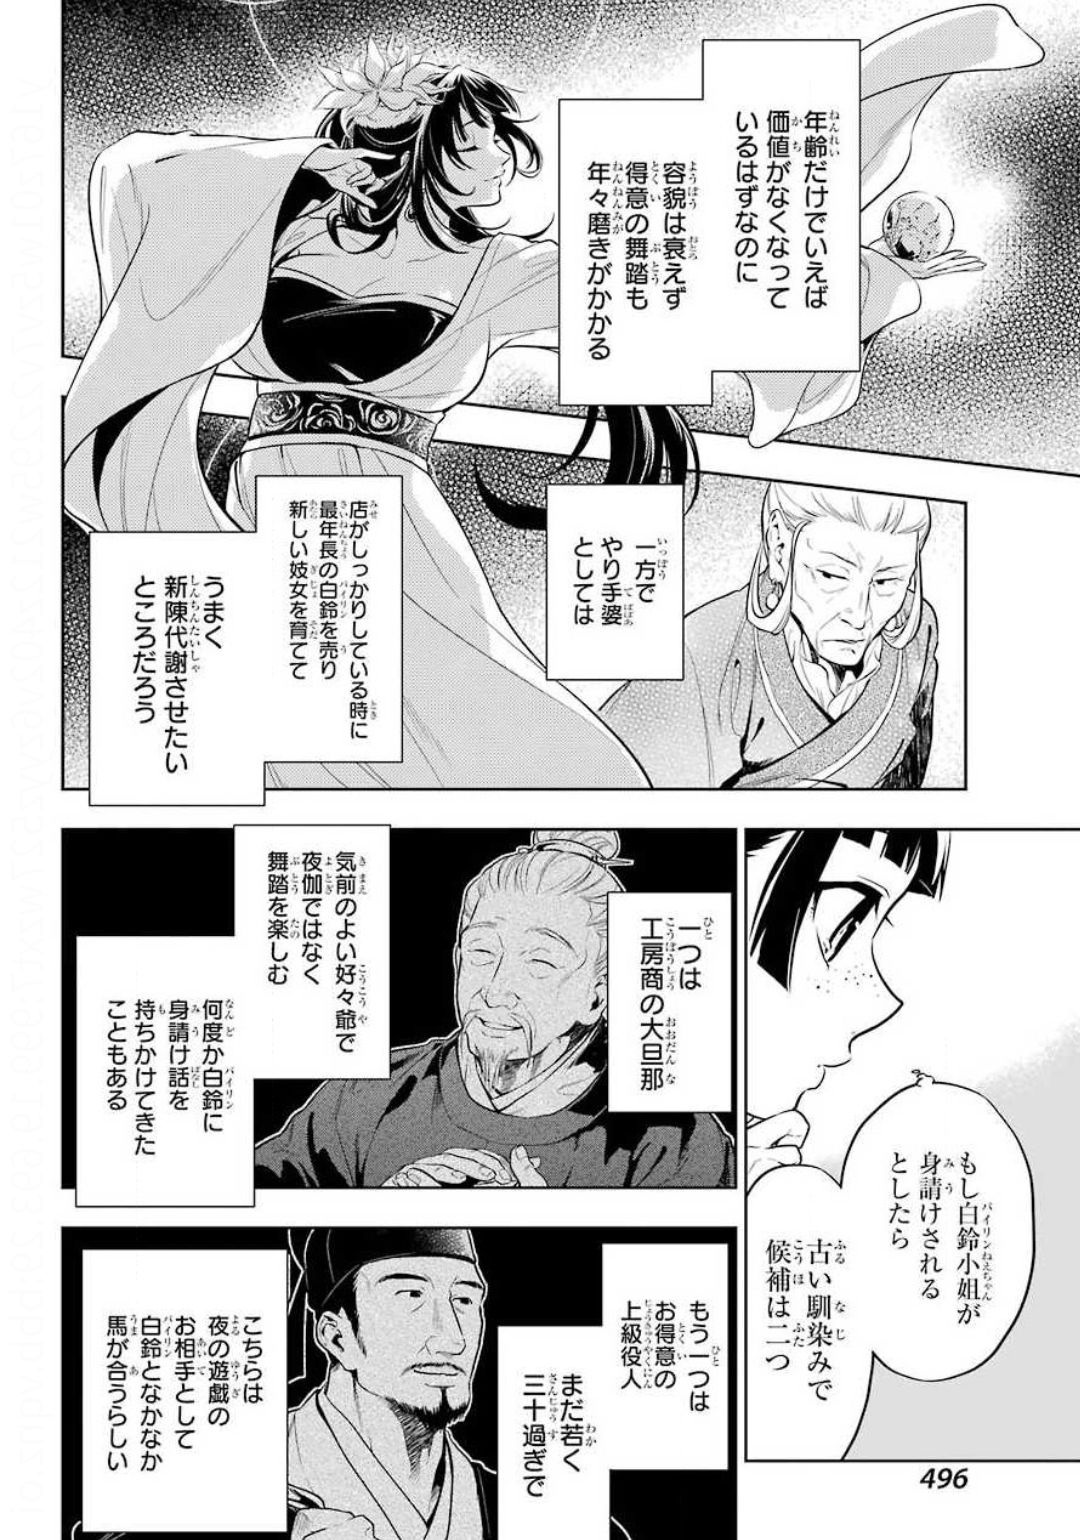 Kusuriya no Hitorigoto - Chapter 35.2 - Page 3